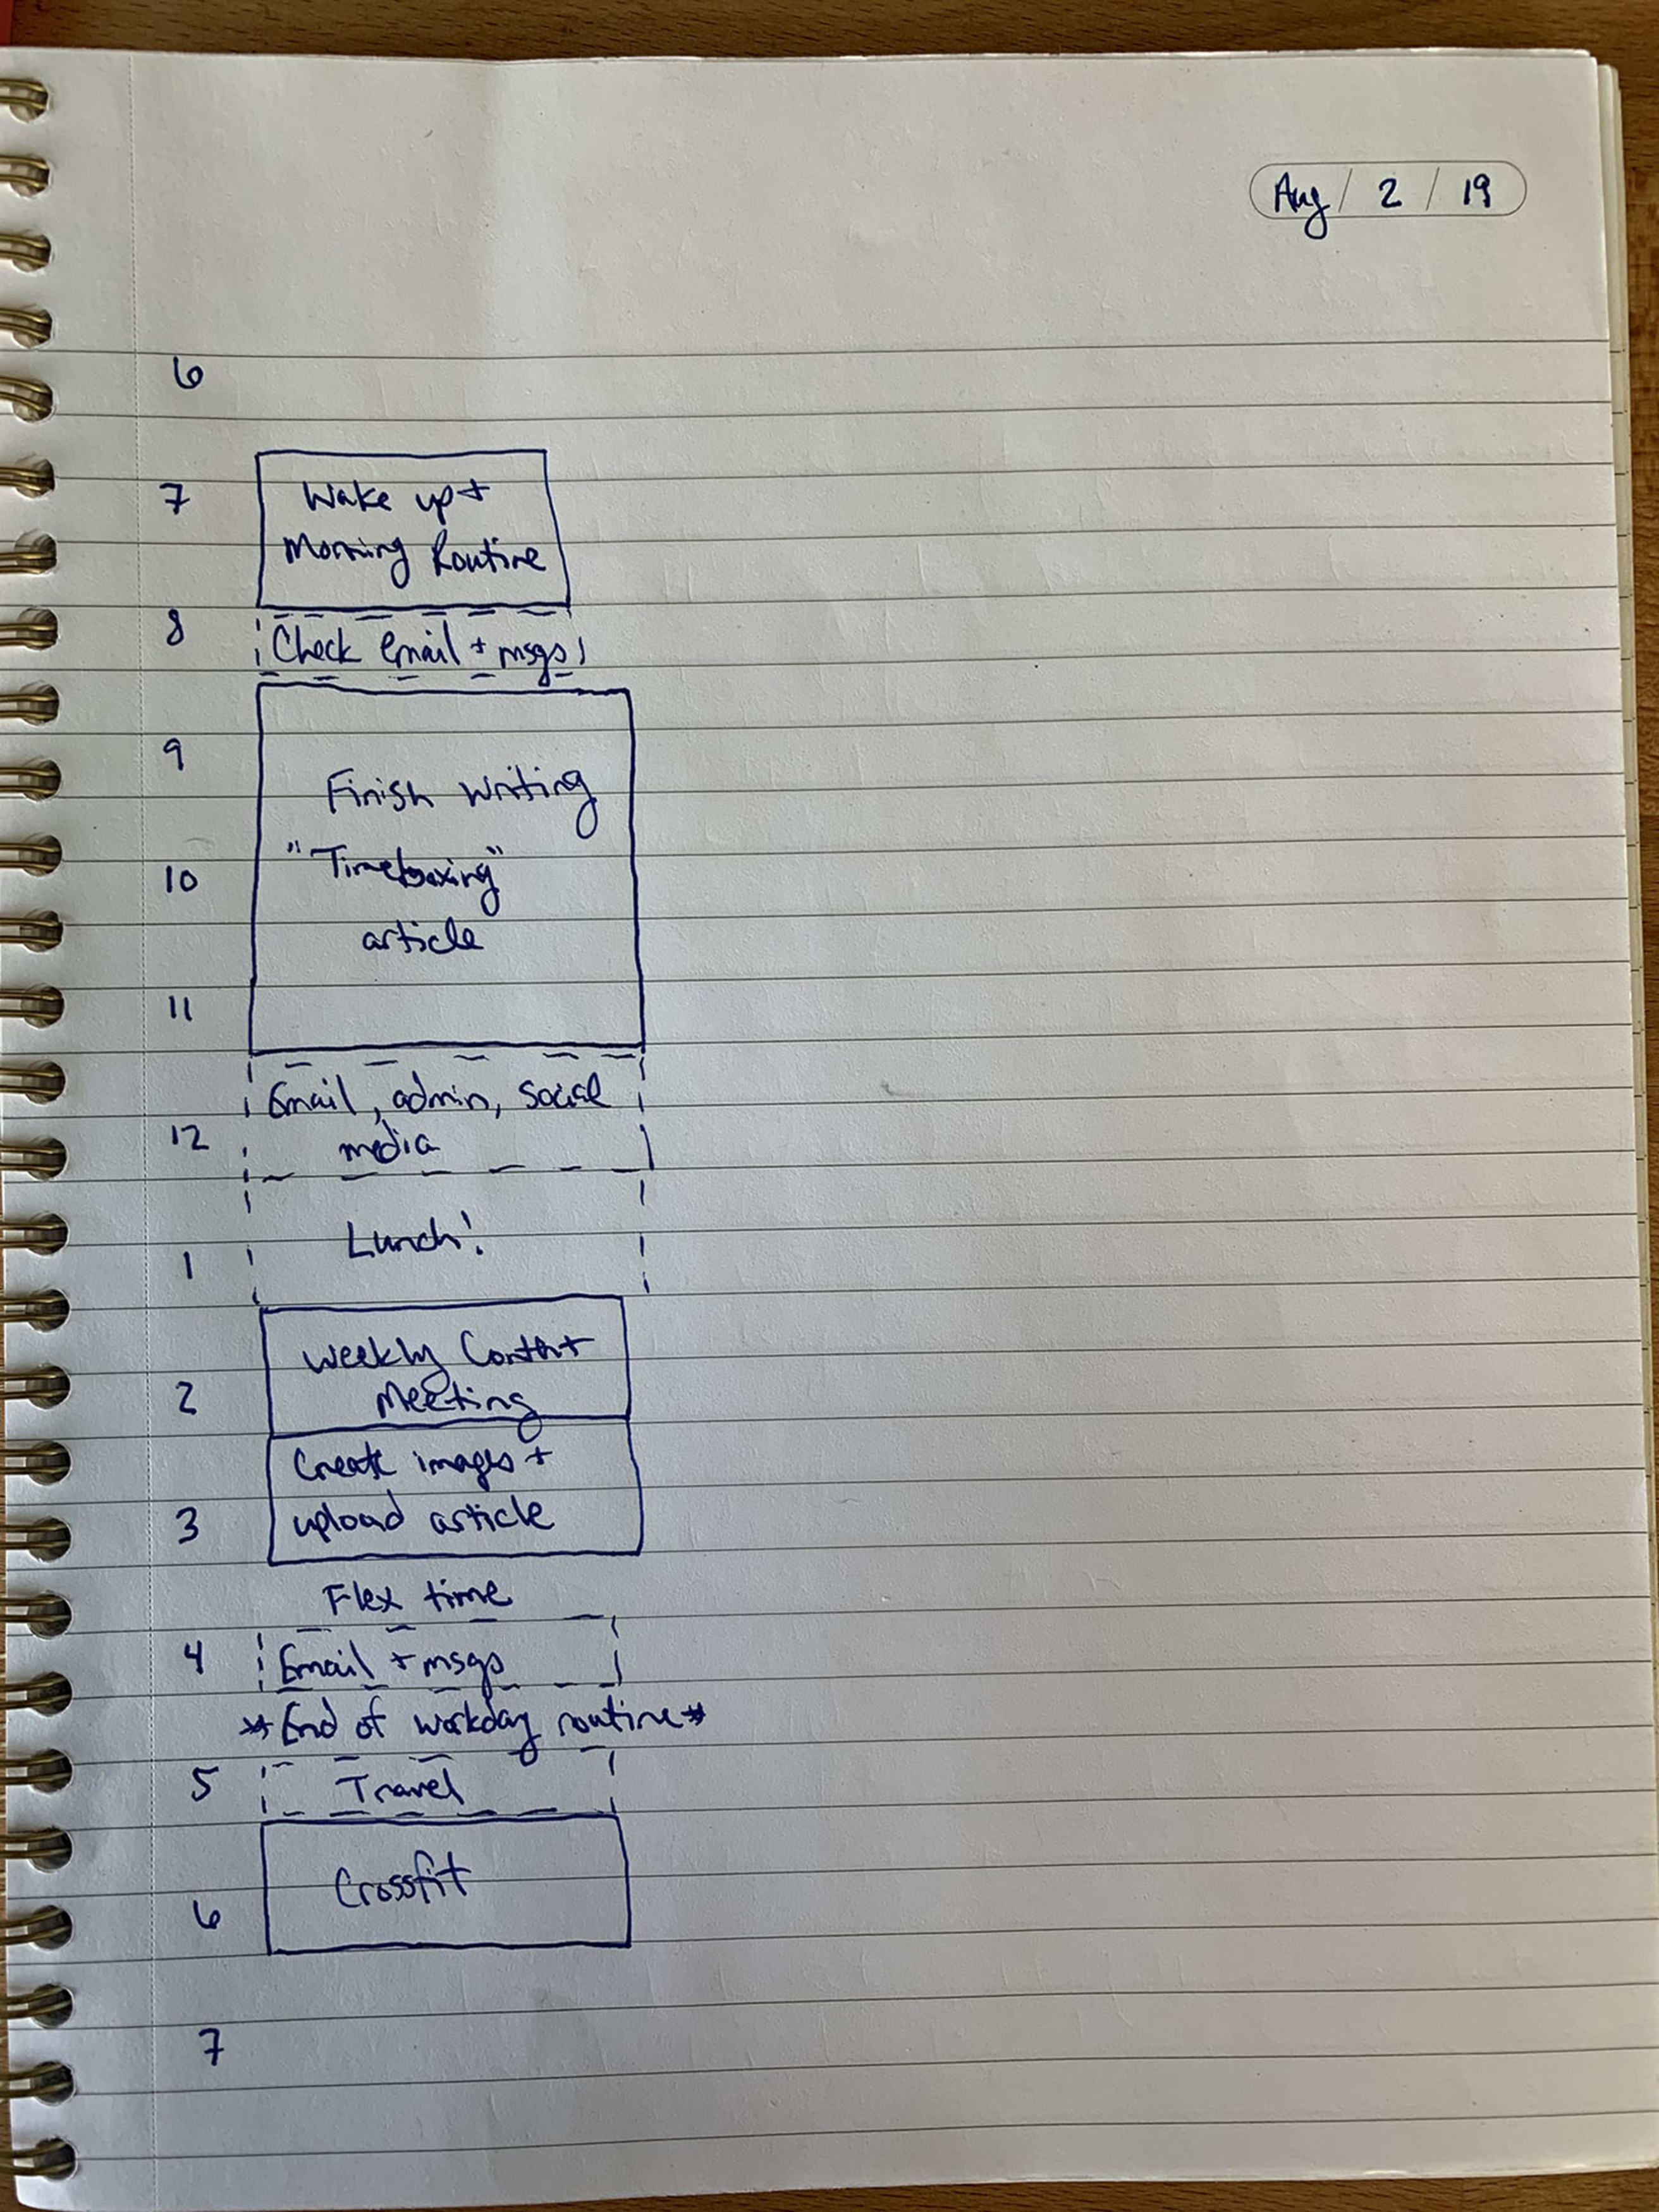 Handwritten timeboxed schedule on paper